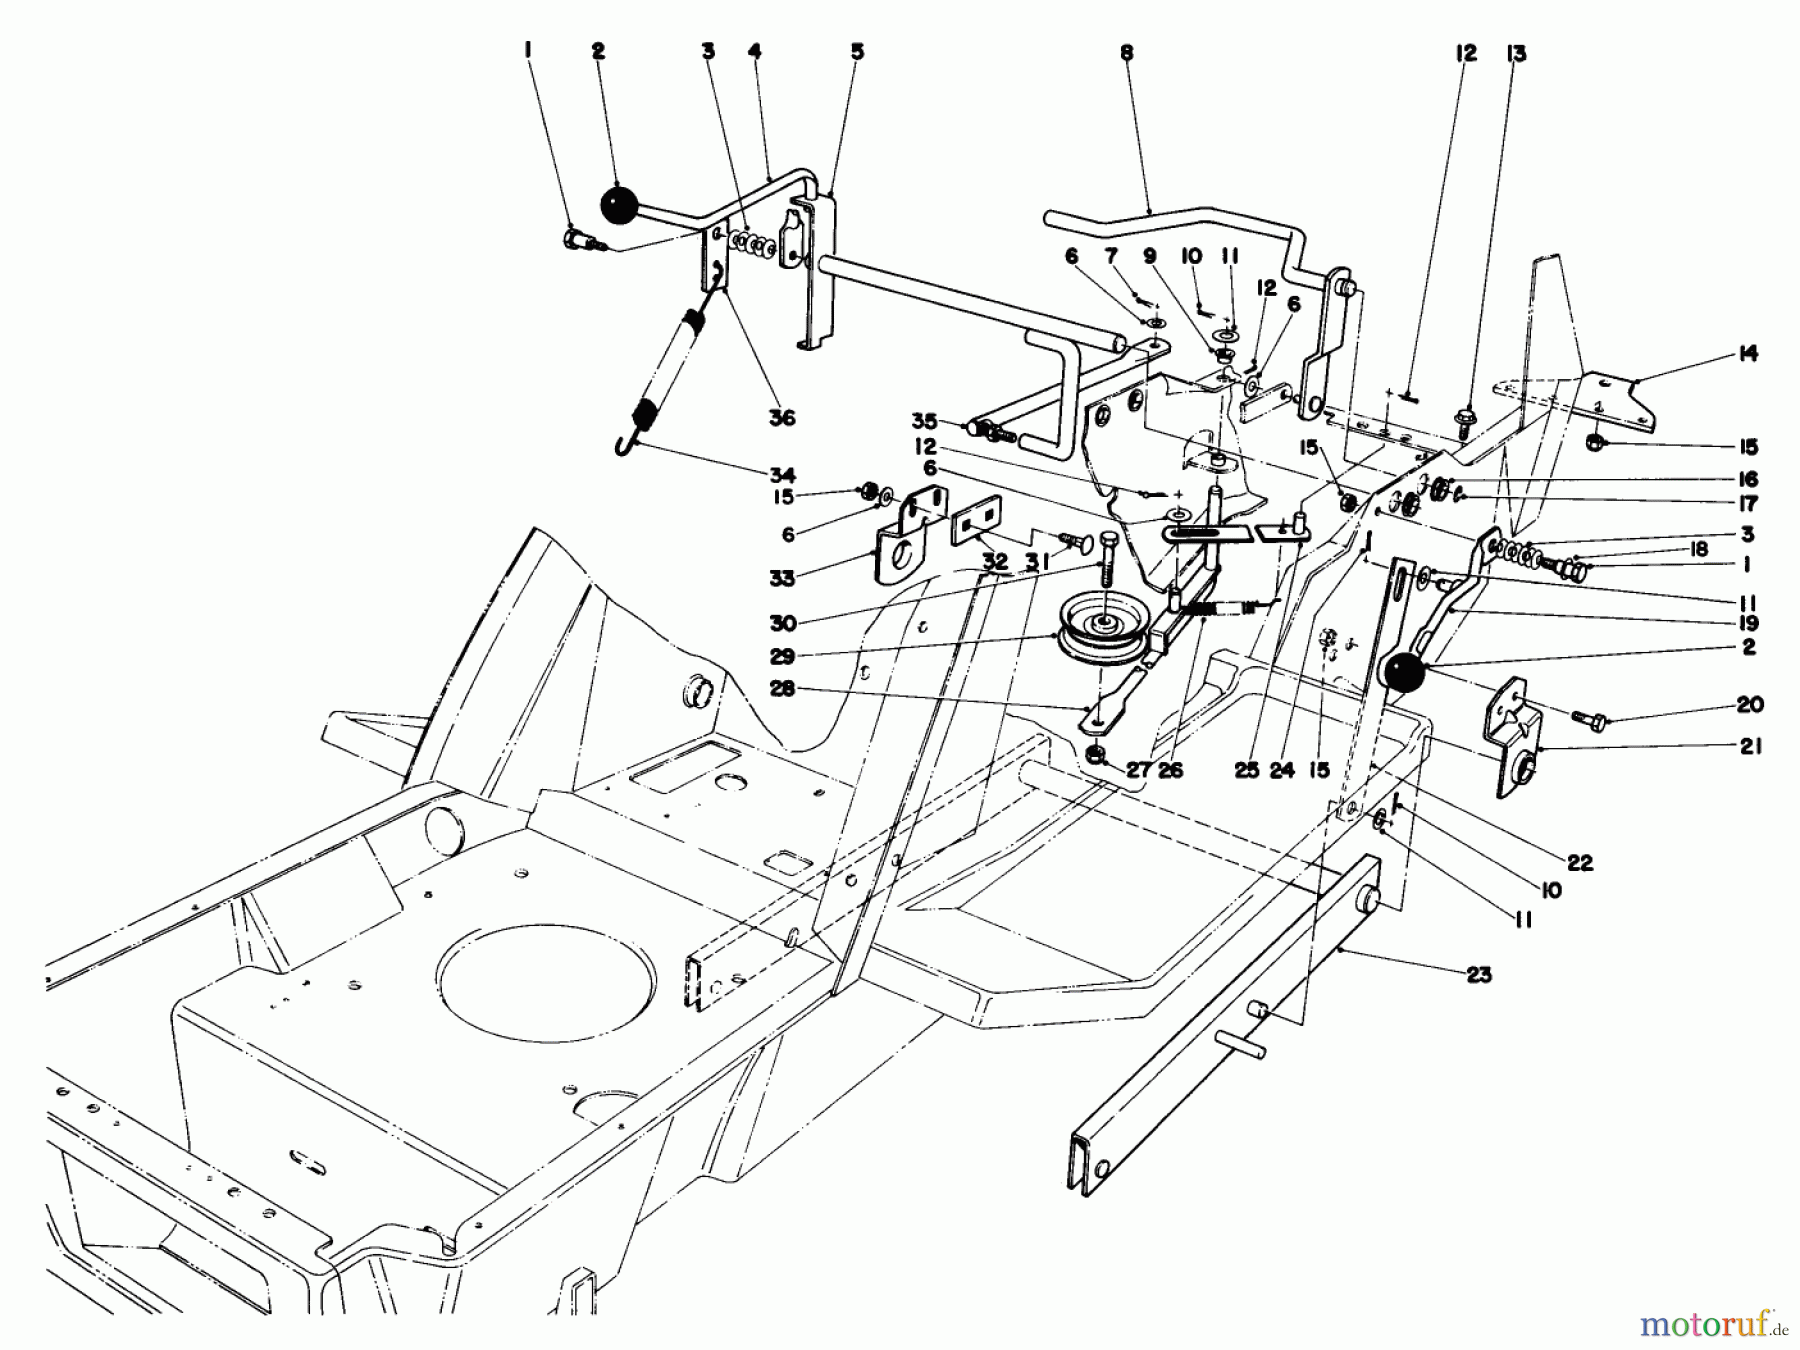  Toro Neu Mowers, Lawn & Garden Tractor Seite 1 57300 (8-32) - Toro 8-32 Front Engine Rider, 1983 (3000001-3999999) SHIFT & CLUTCH ASSEMBLY